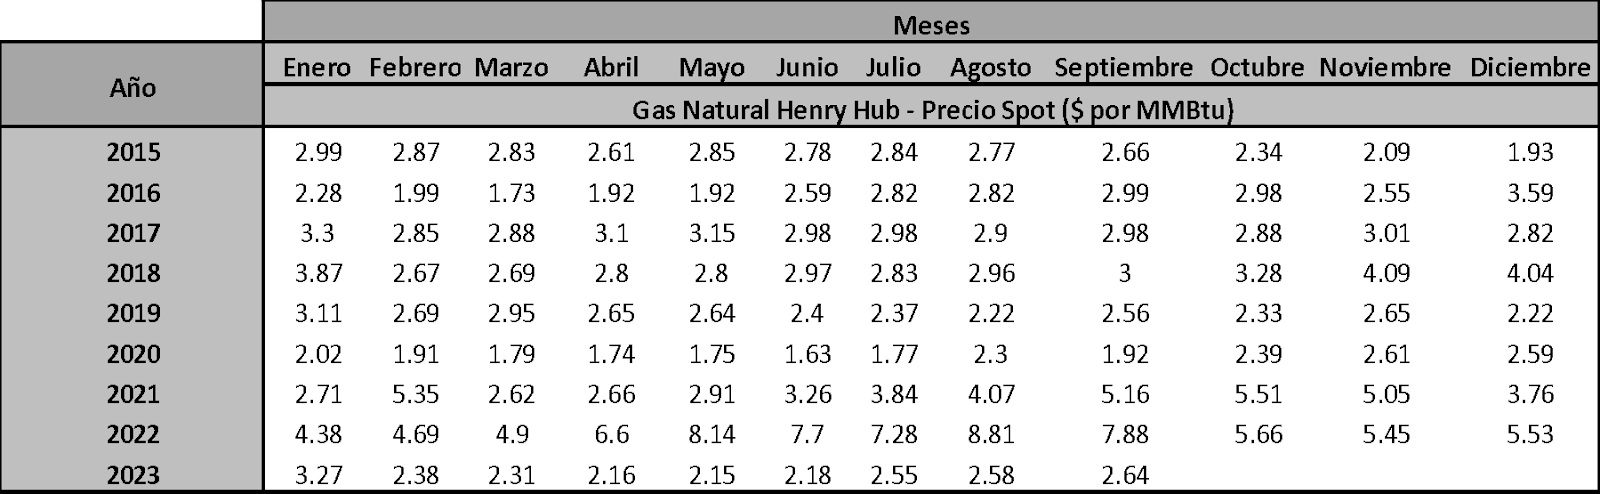 Precio Spot promedio mensual del Gas Natural Henry Hub (año 2015-2023). 